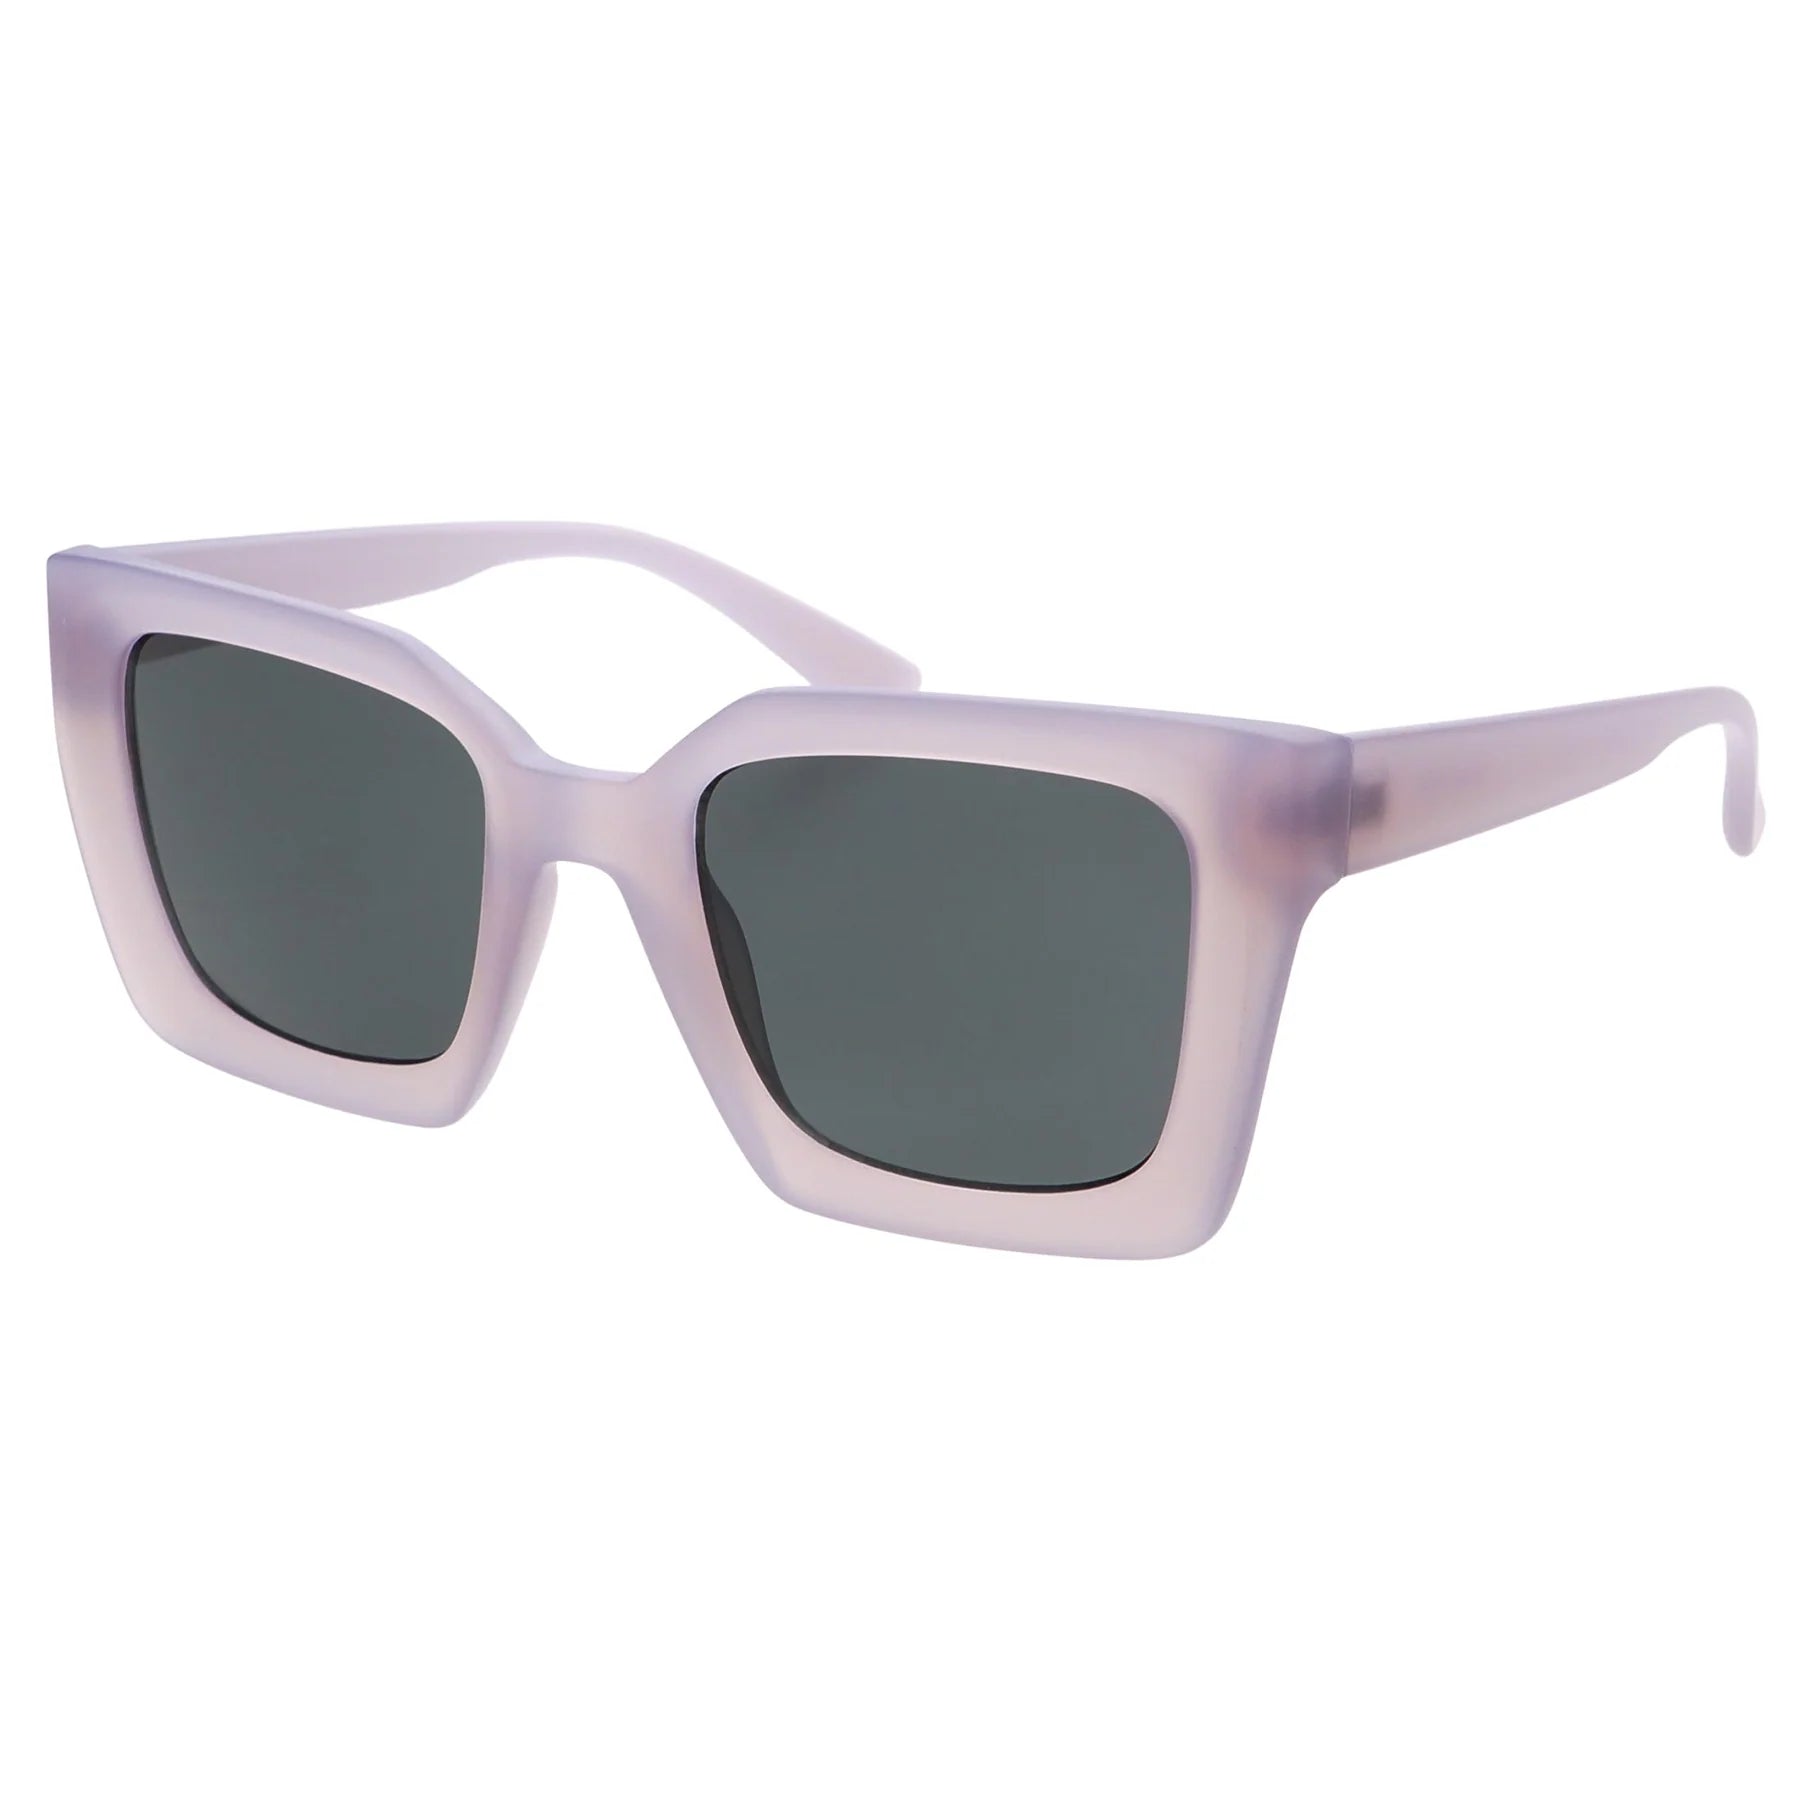 coco freyrs sunglasses